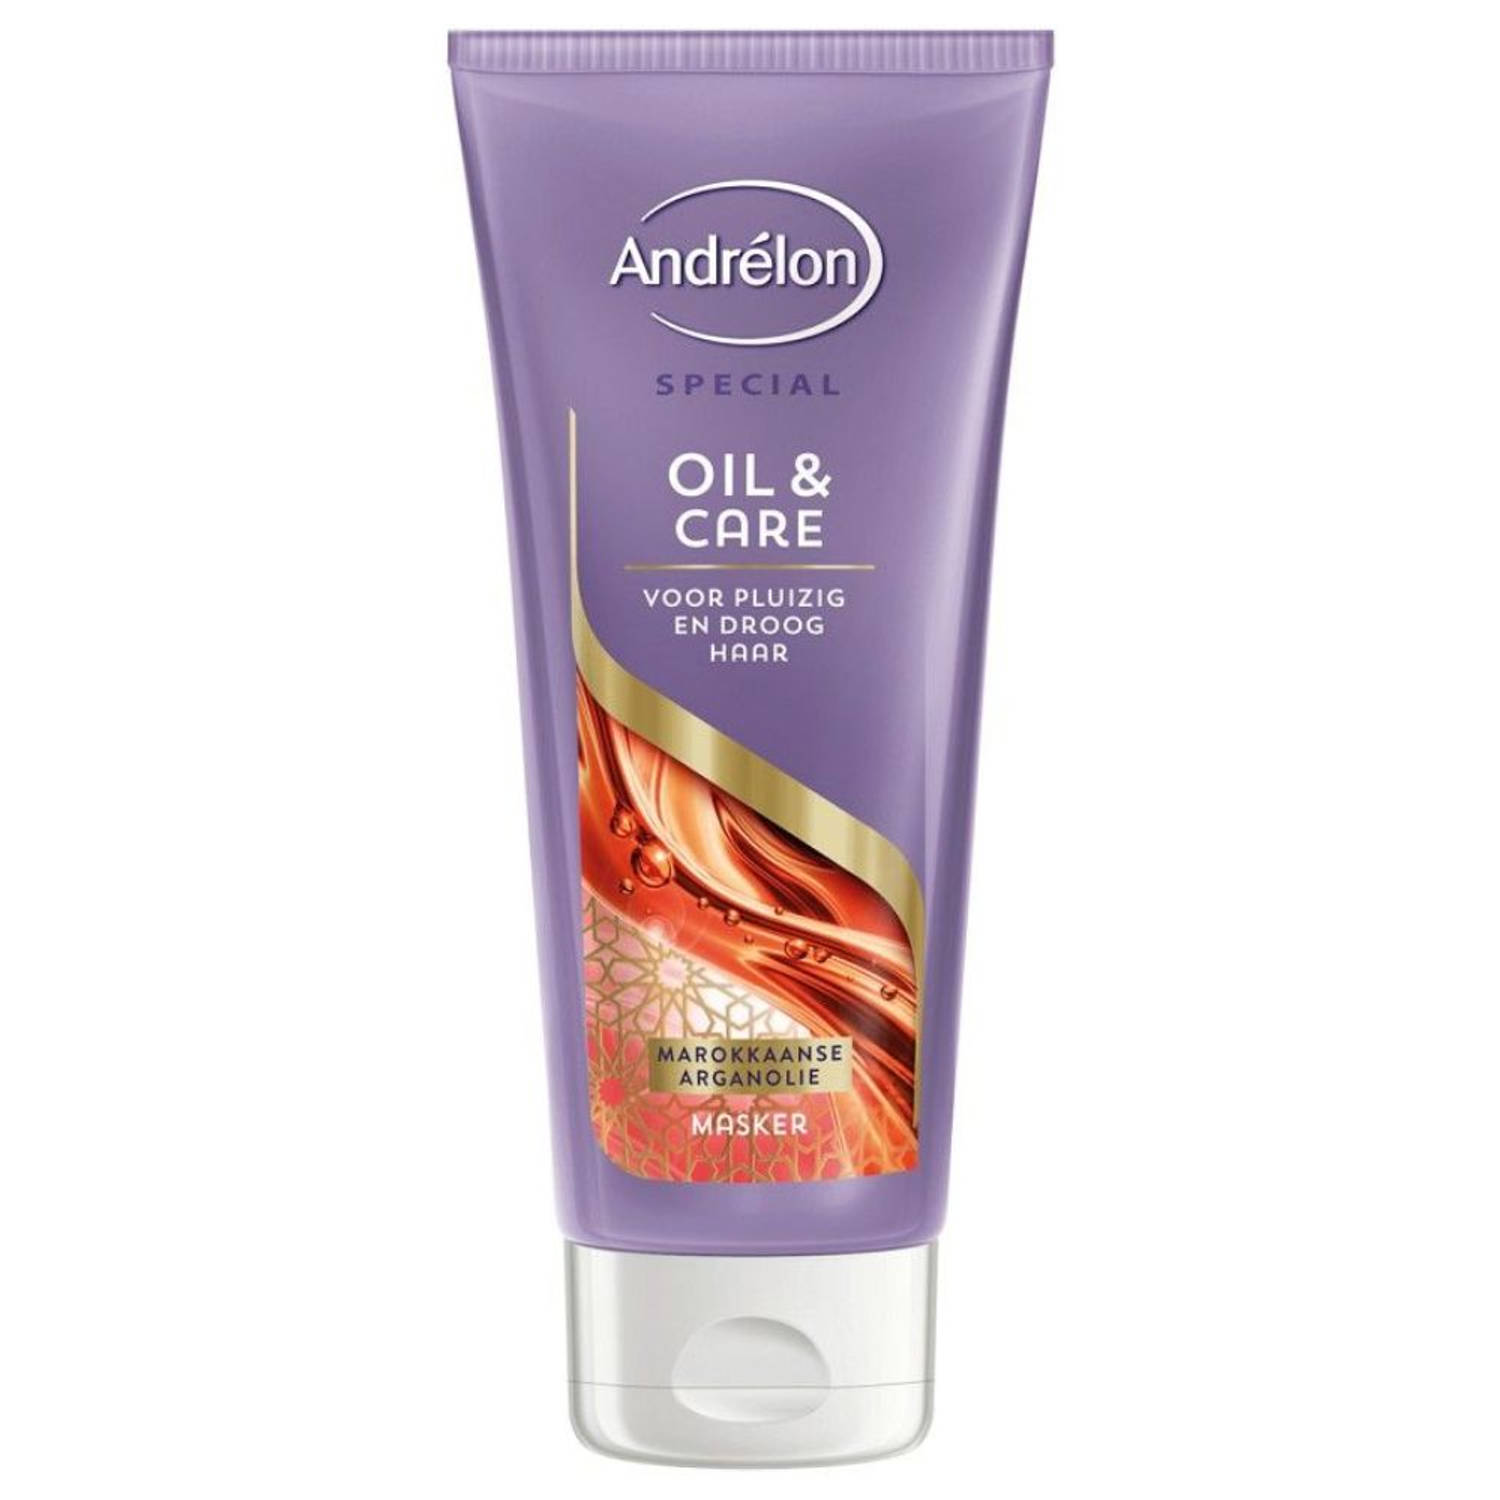 Andrelon Oil en Care Haarmasker 180 ml